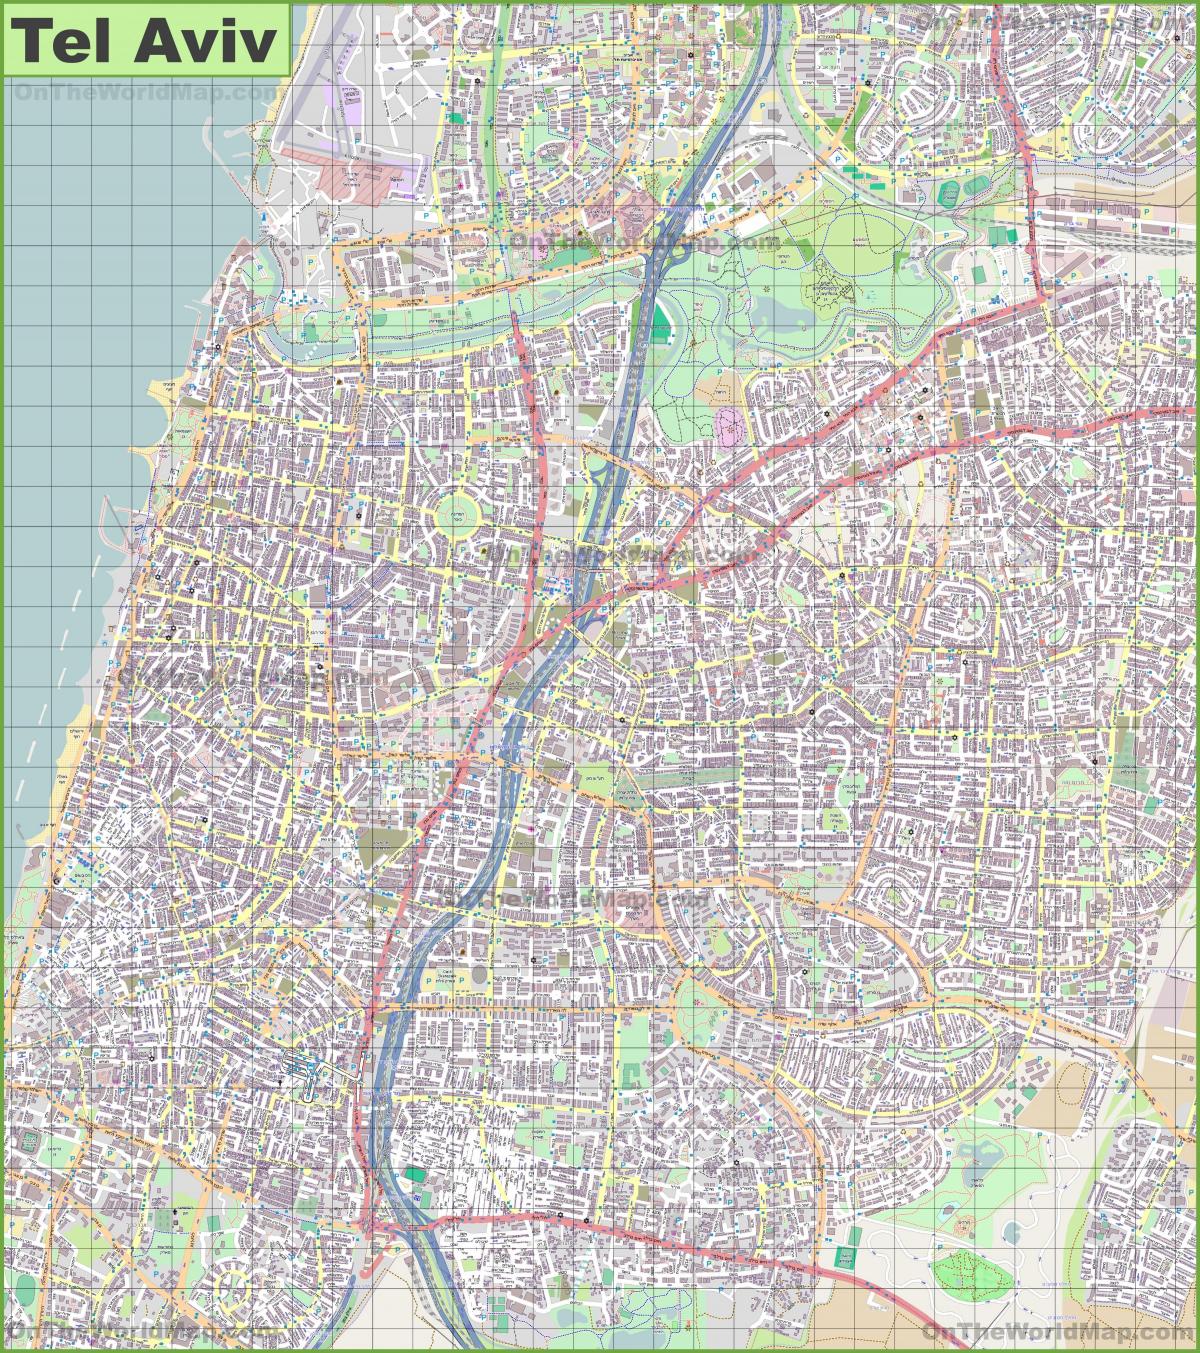 Tel Aviv streets map